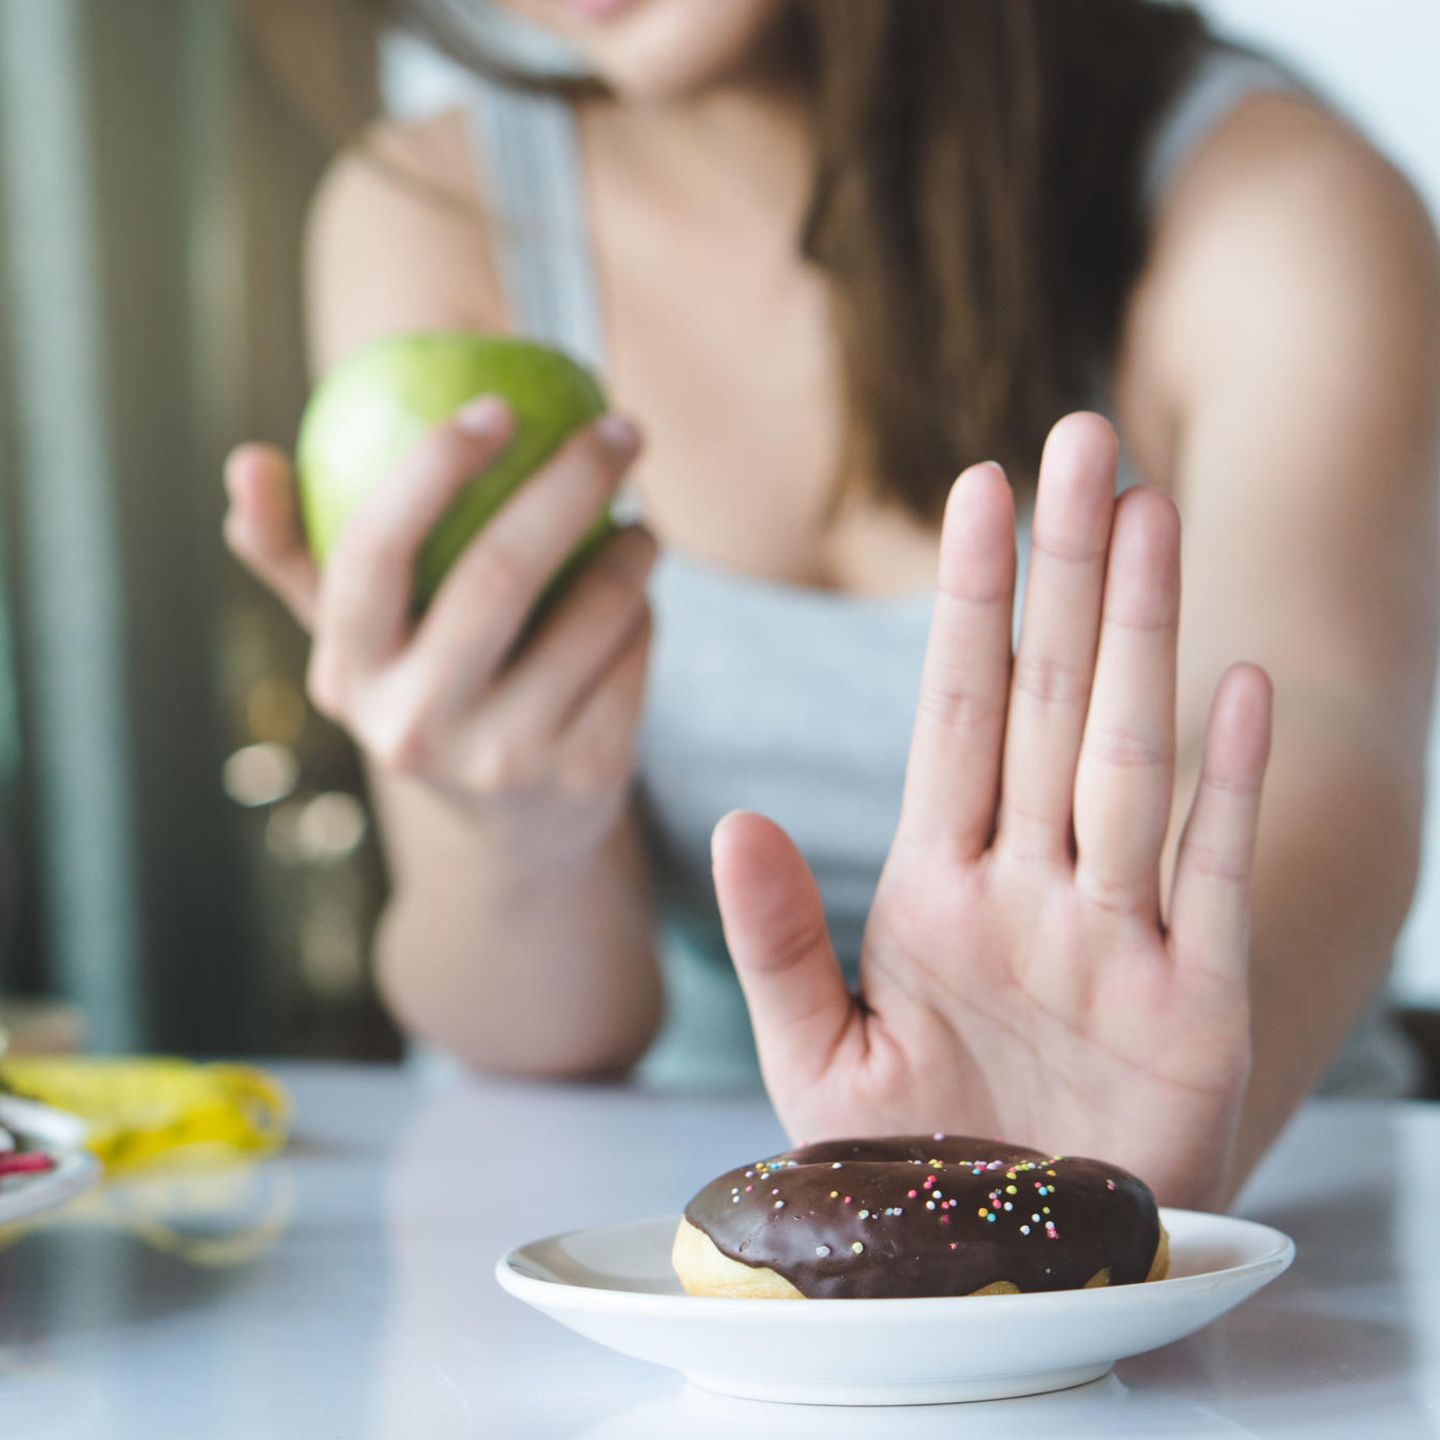 Vermeide Zucker: Frau isst Apfel statt Donat